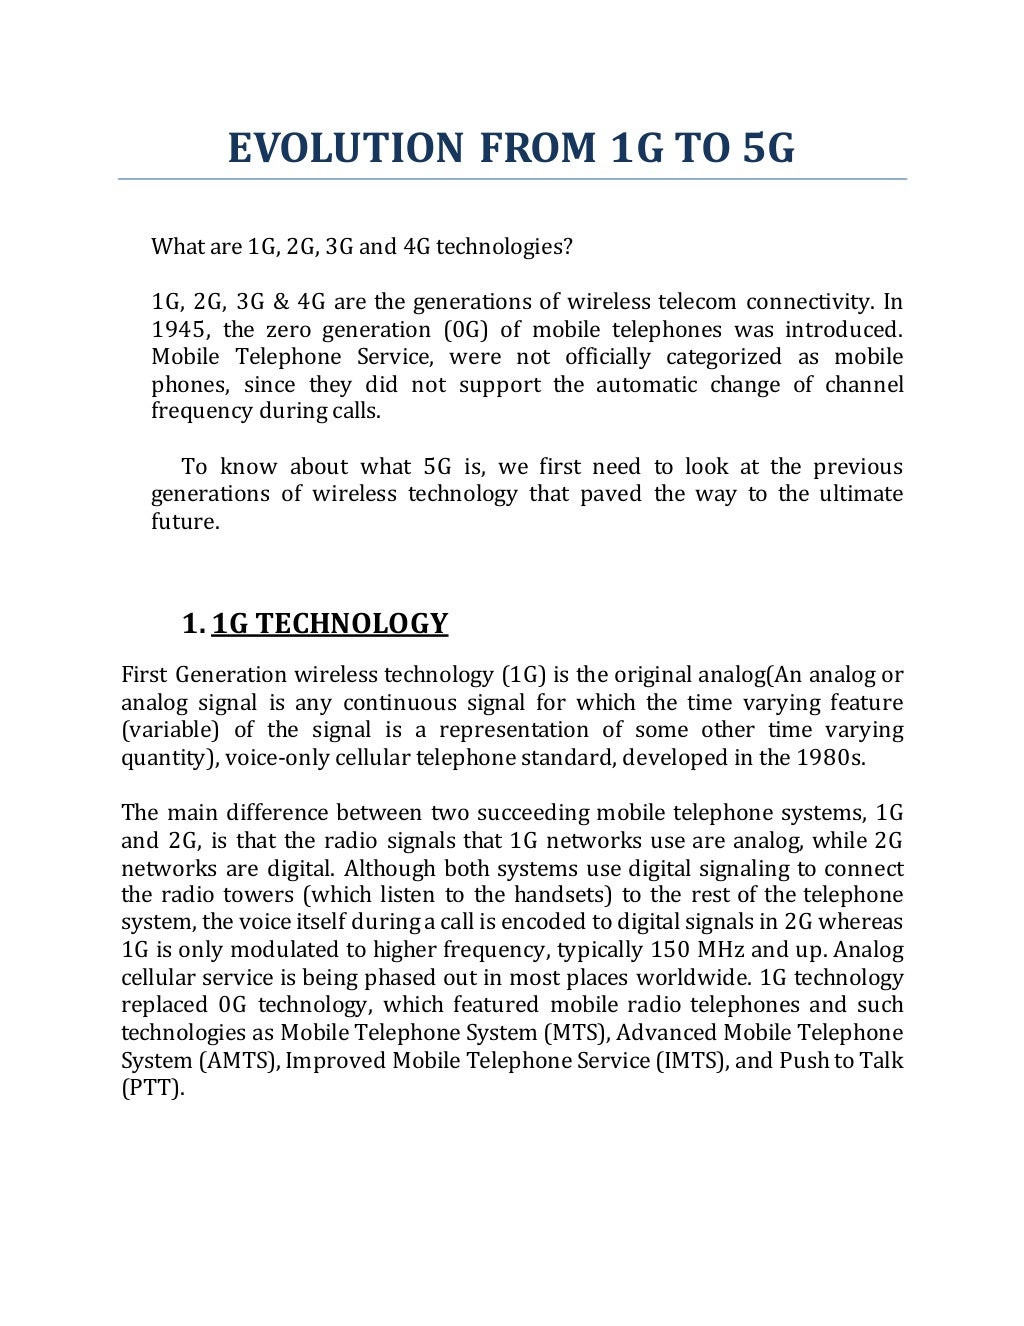 5g technology research paper pdf